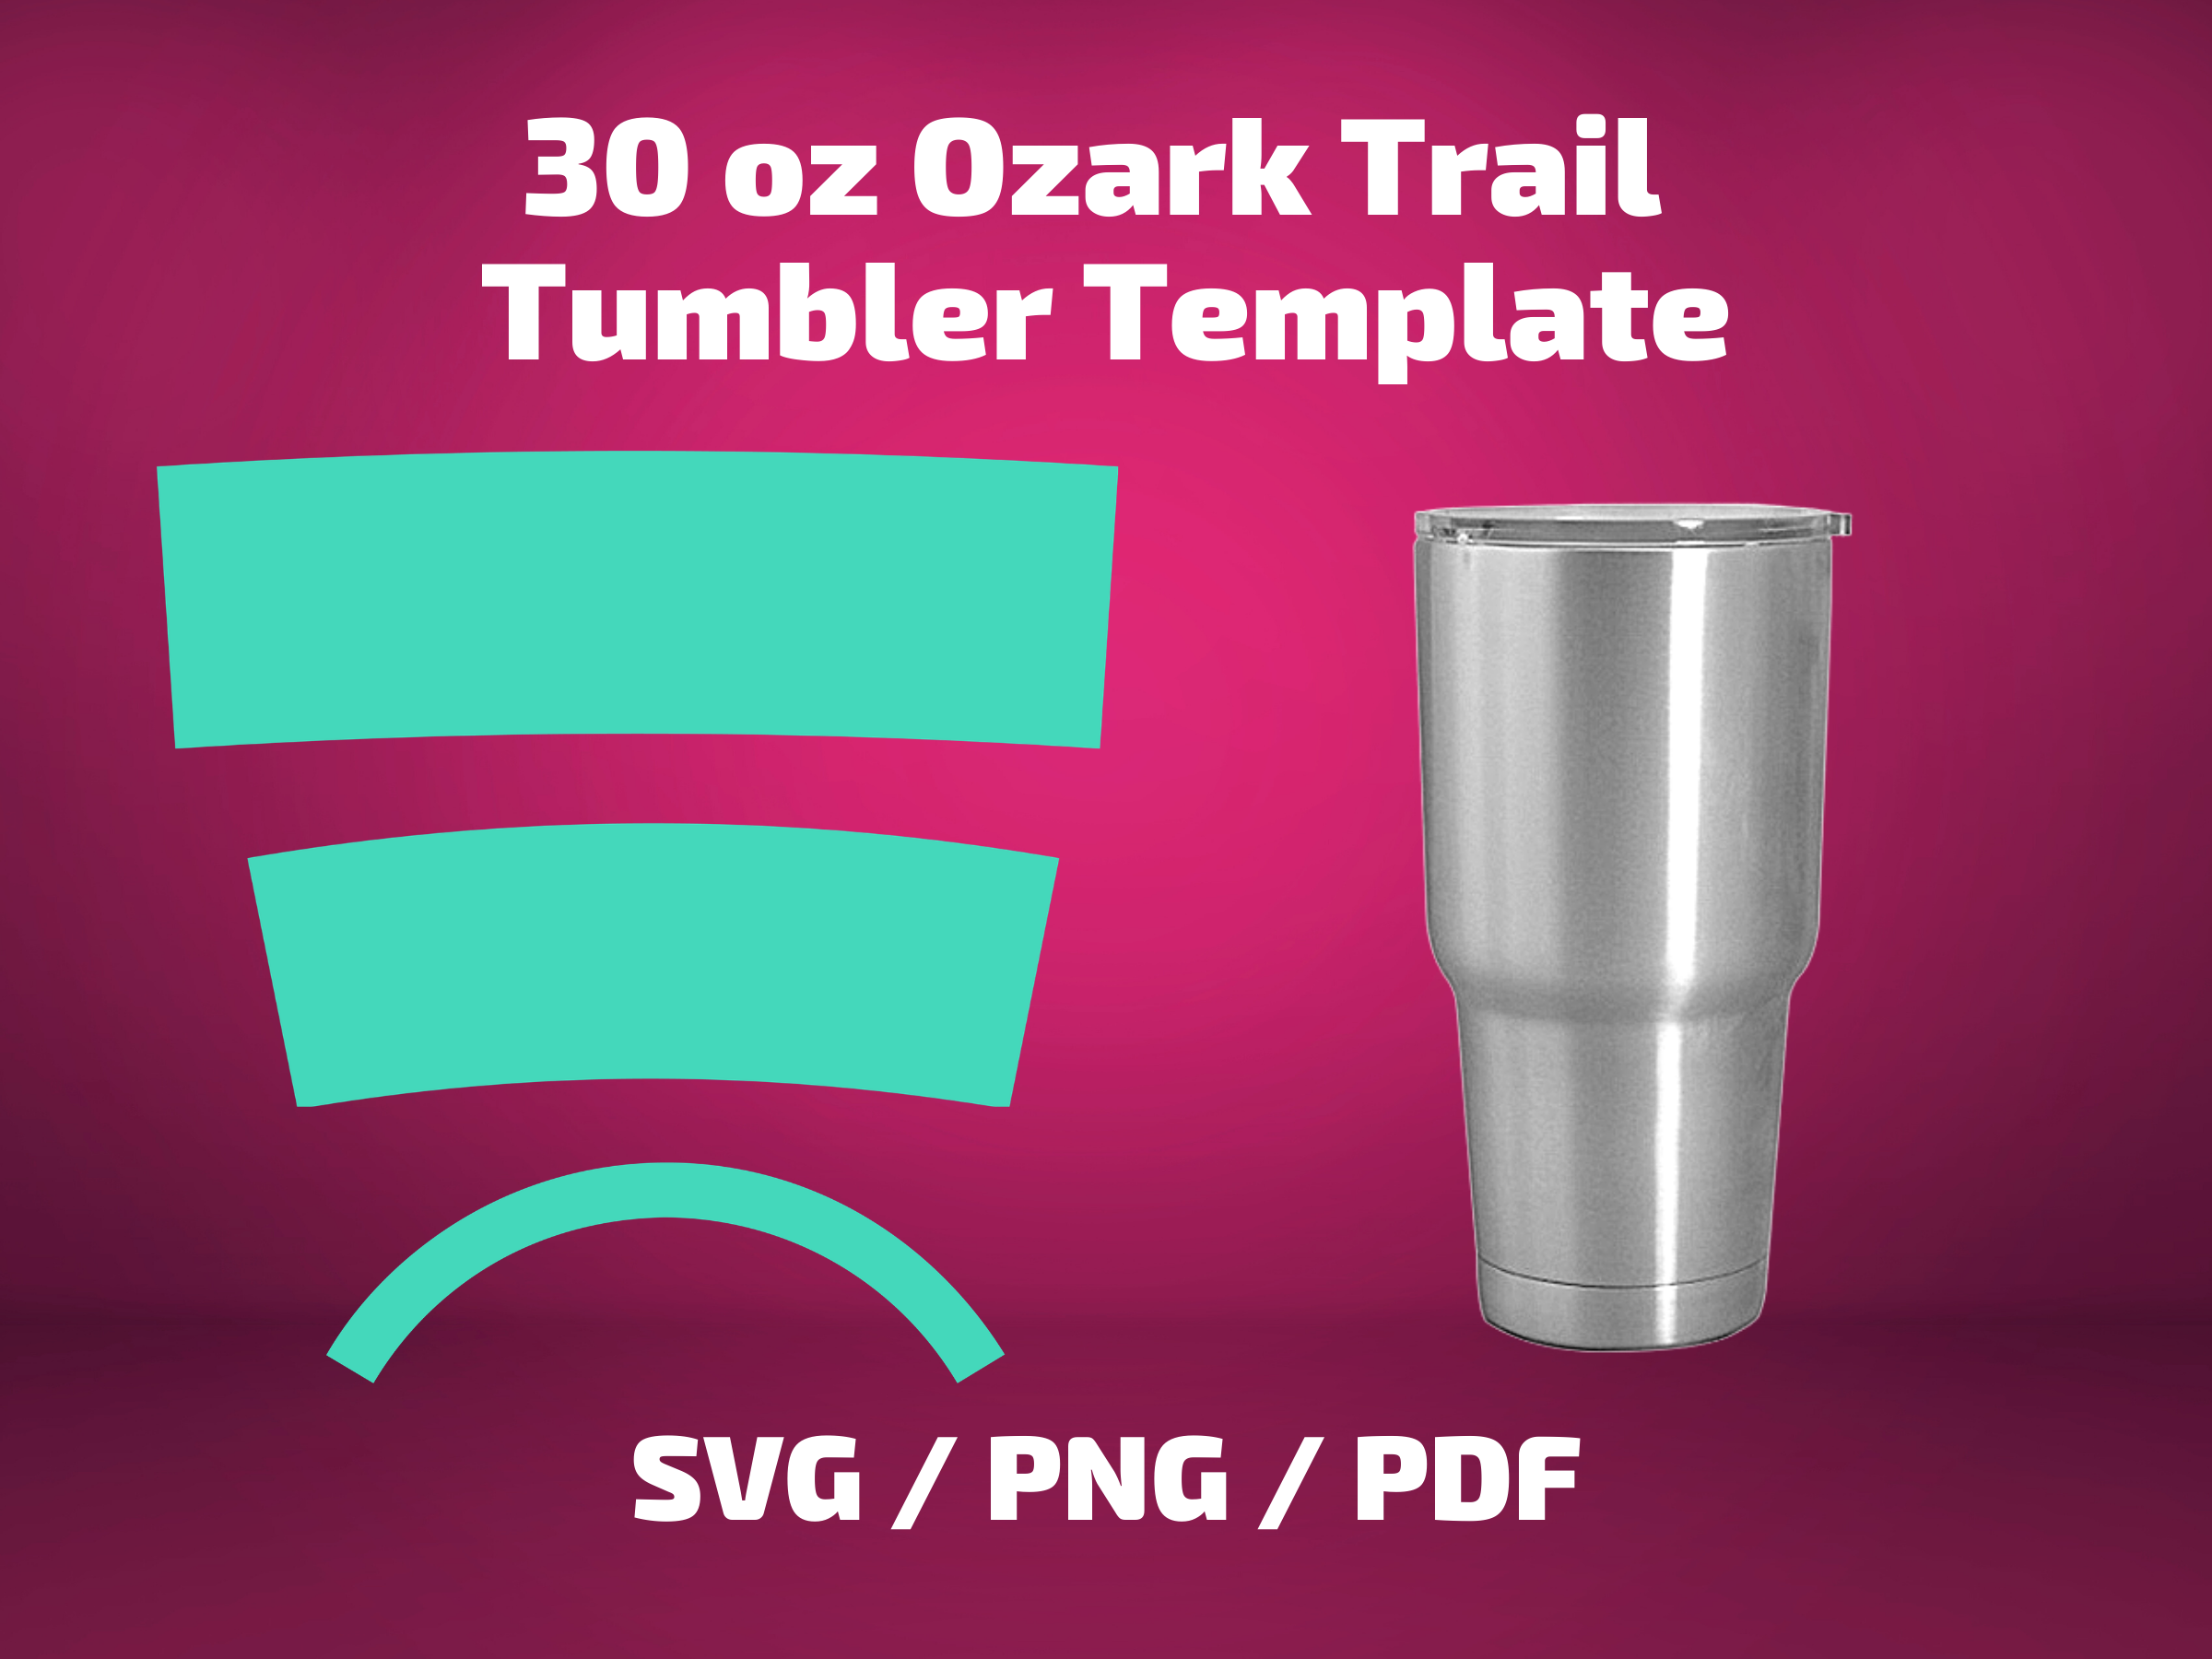 Tumbler Template Ozark Trail 30 Oz Graphic by bambina33334 · Creative  Fabrica